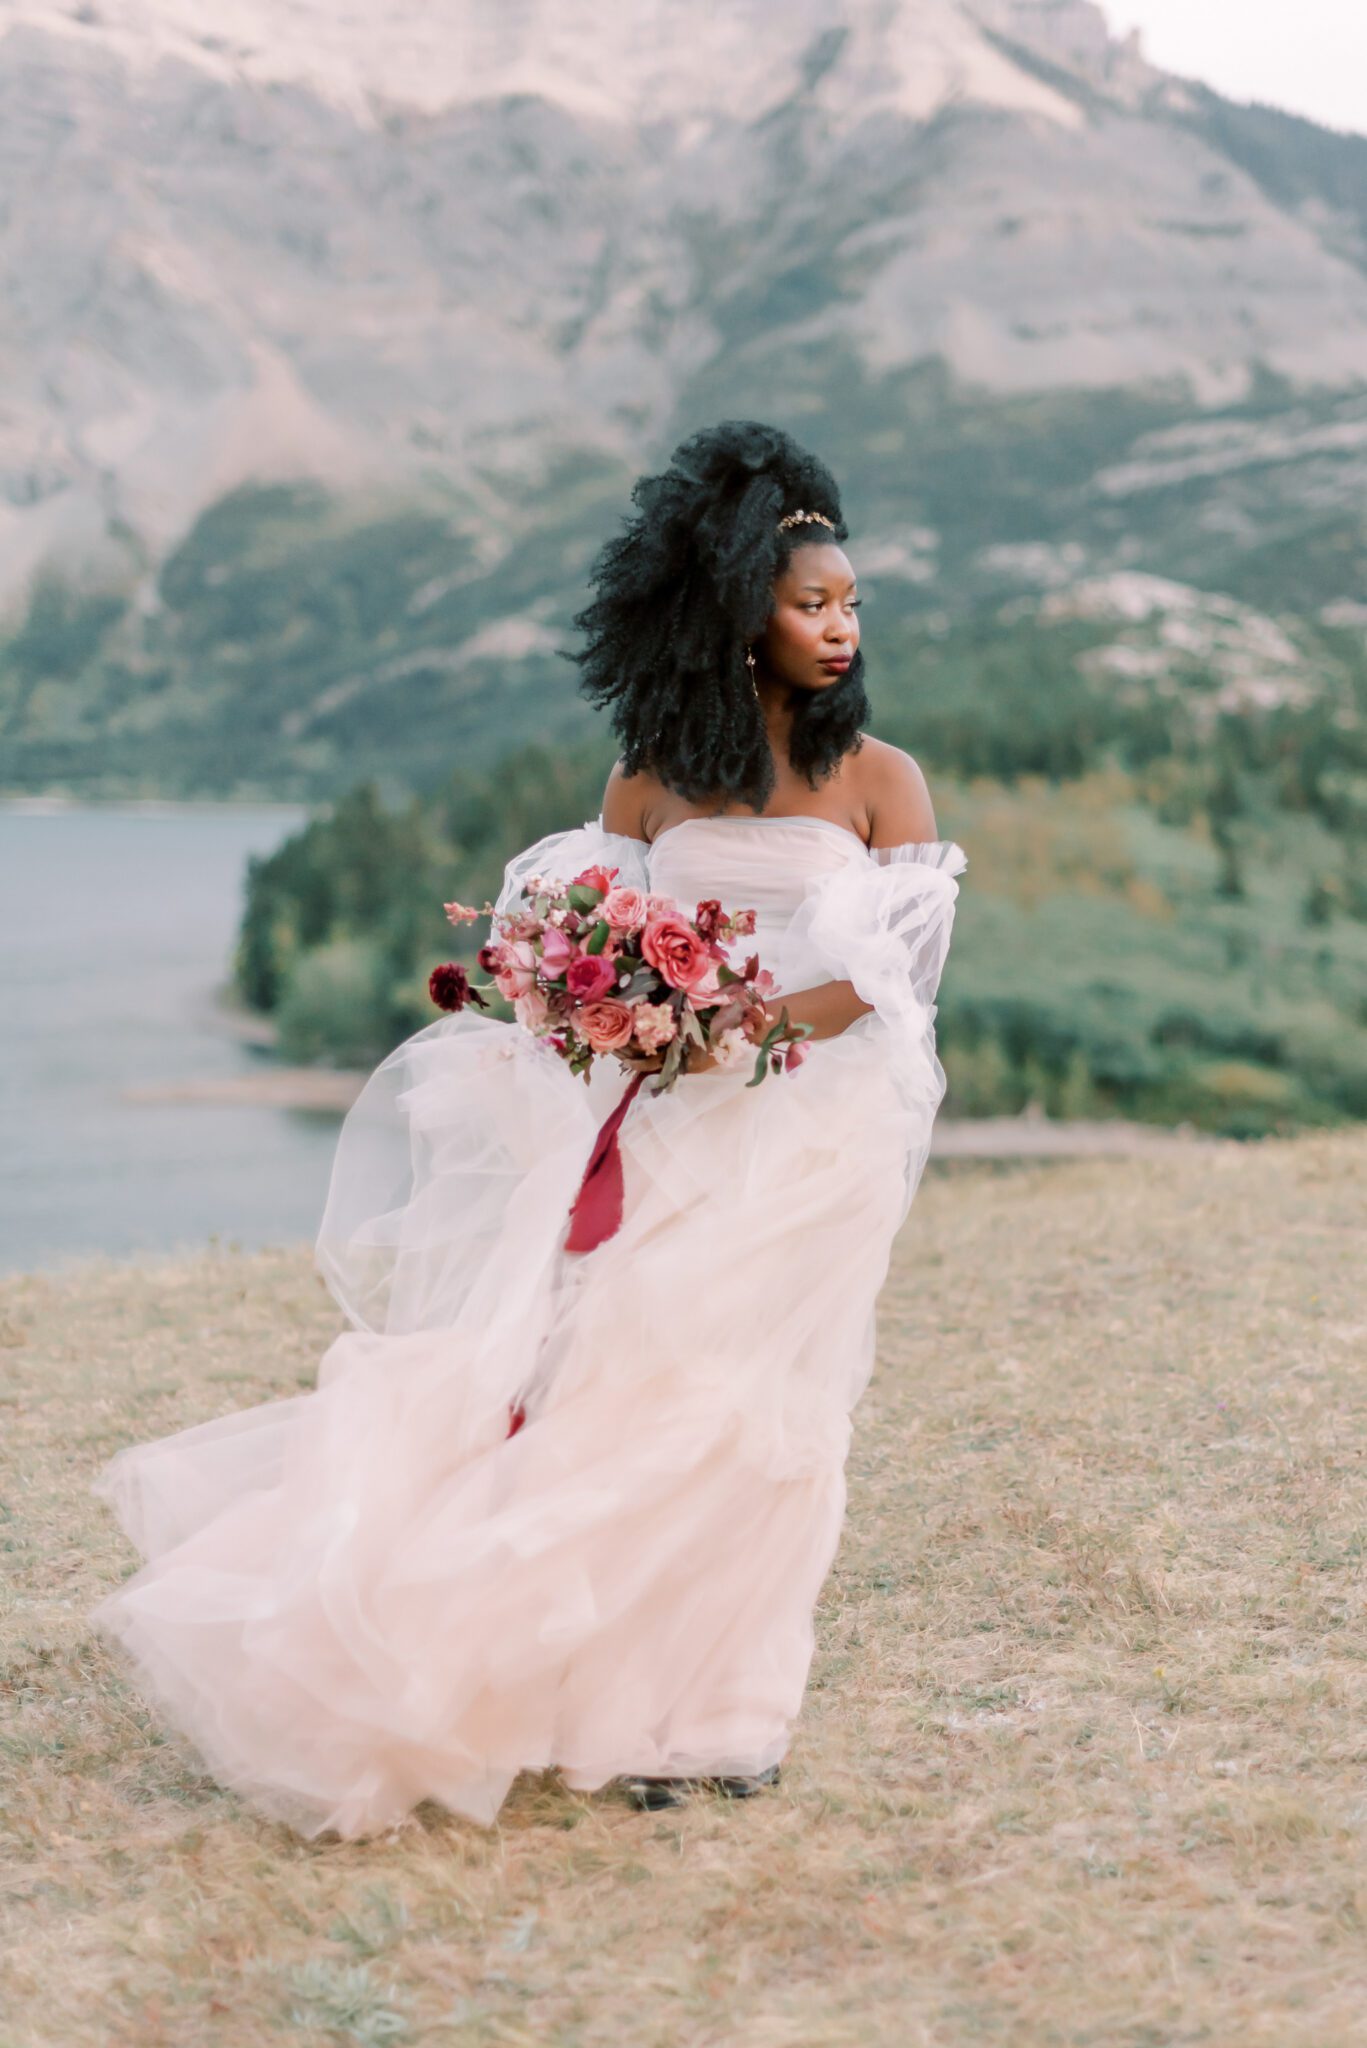 Bride wearing blush tulle wedding dress by Alexandra Victoria Rose, Waterton, Alberta outdoor bridal portrait